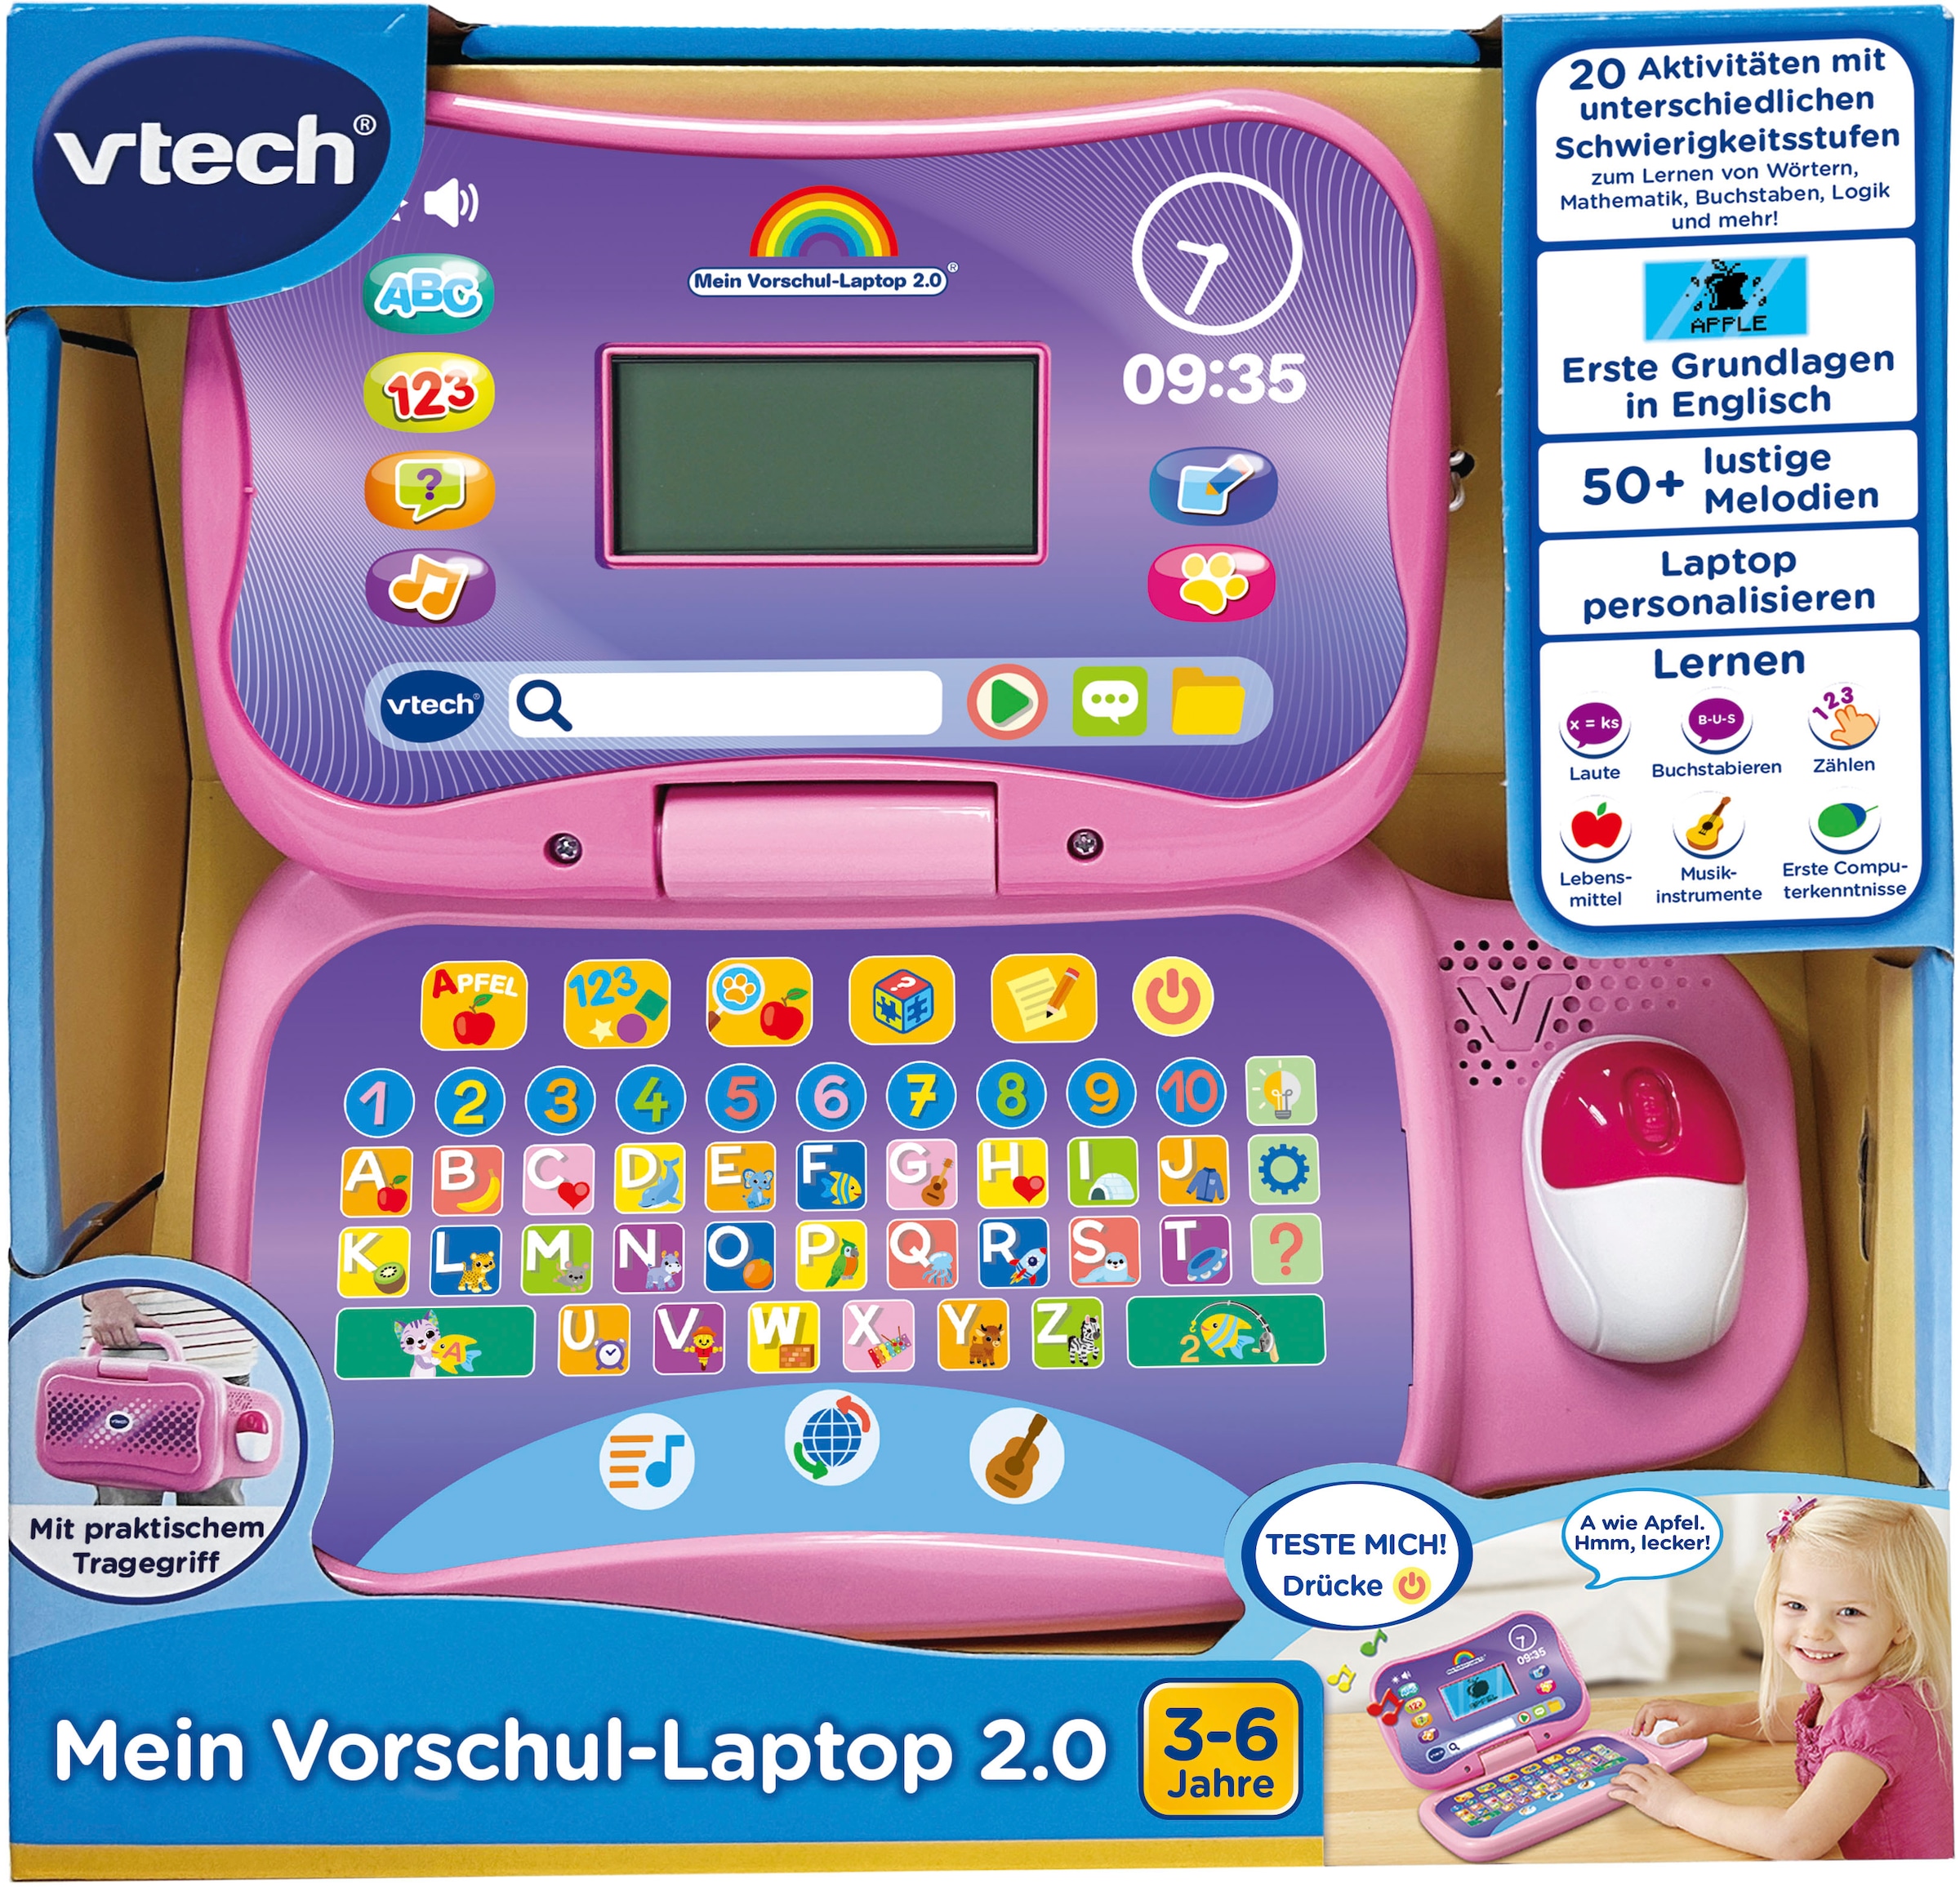 Ordi VTech Genius Kid - Rose - VTech